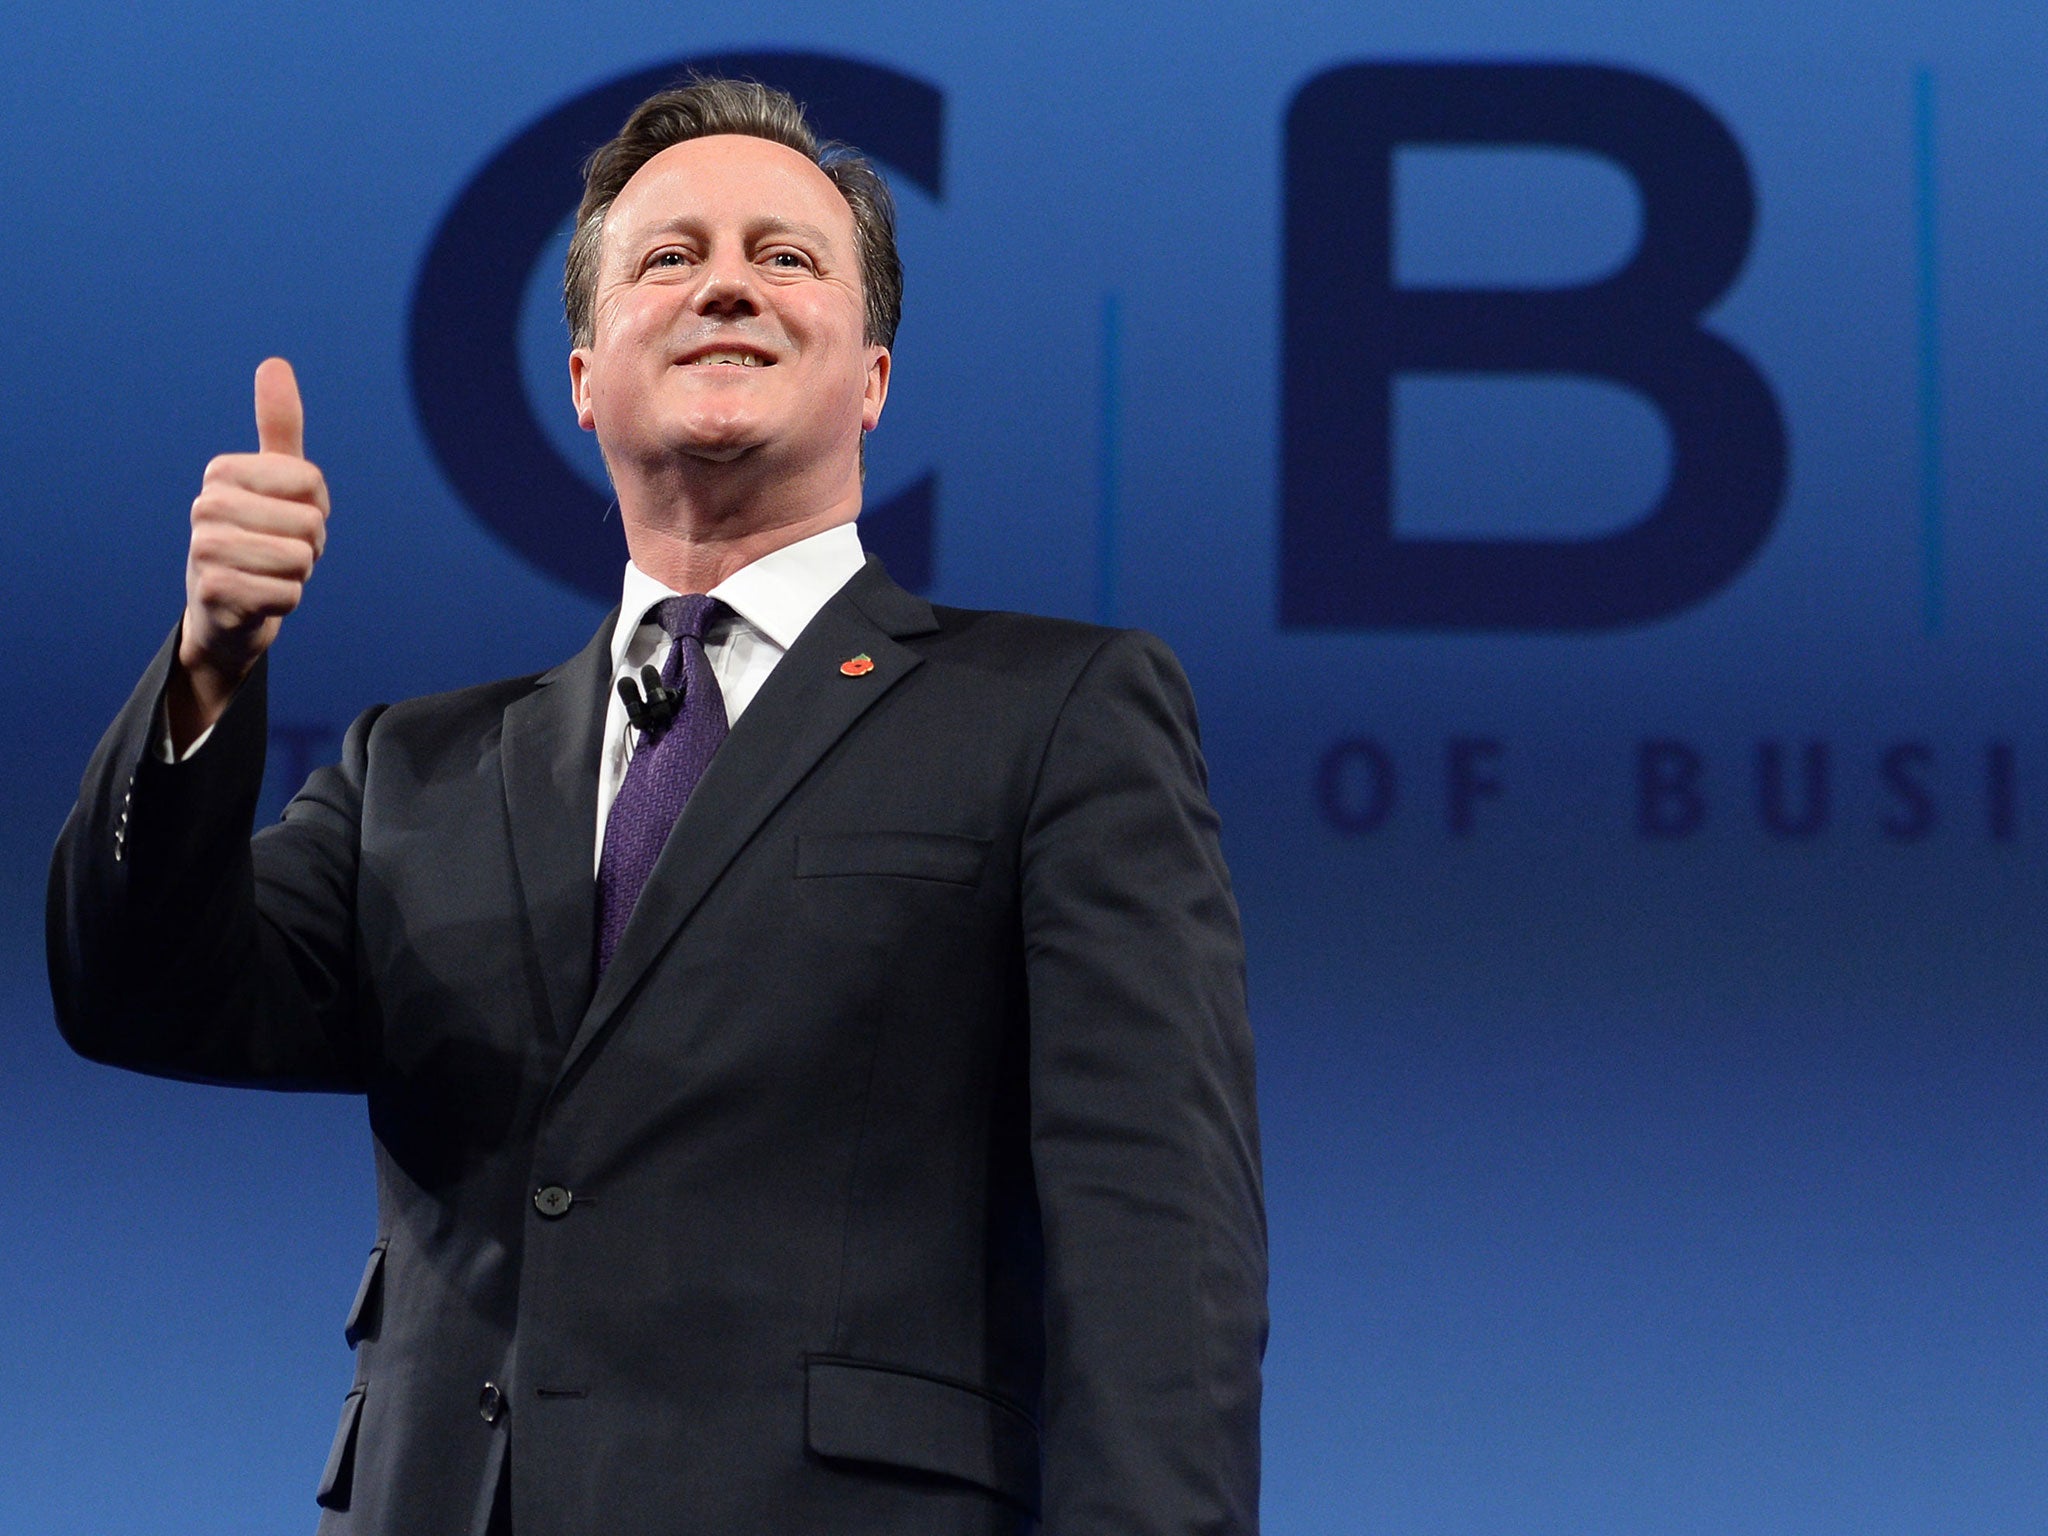 Prime Minister David Cameron addresses the CBI annual conference in London